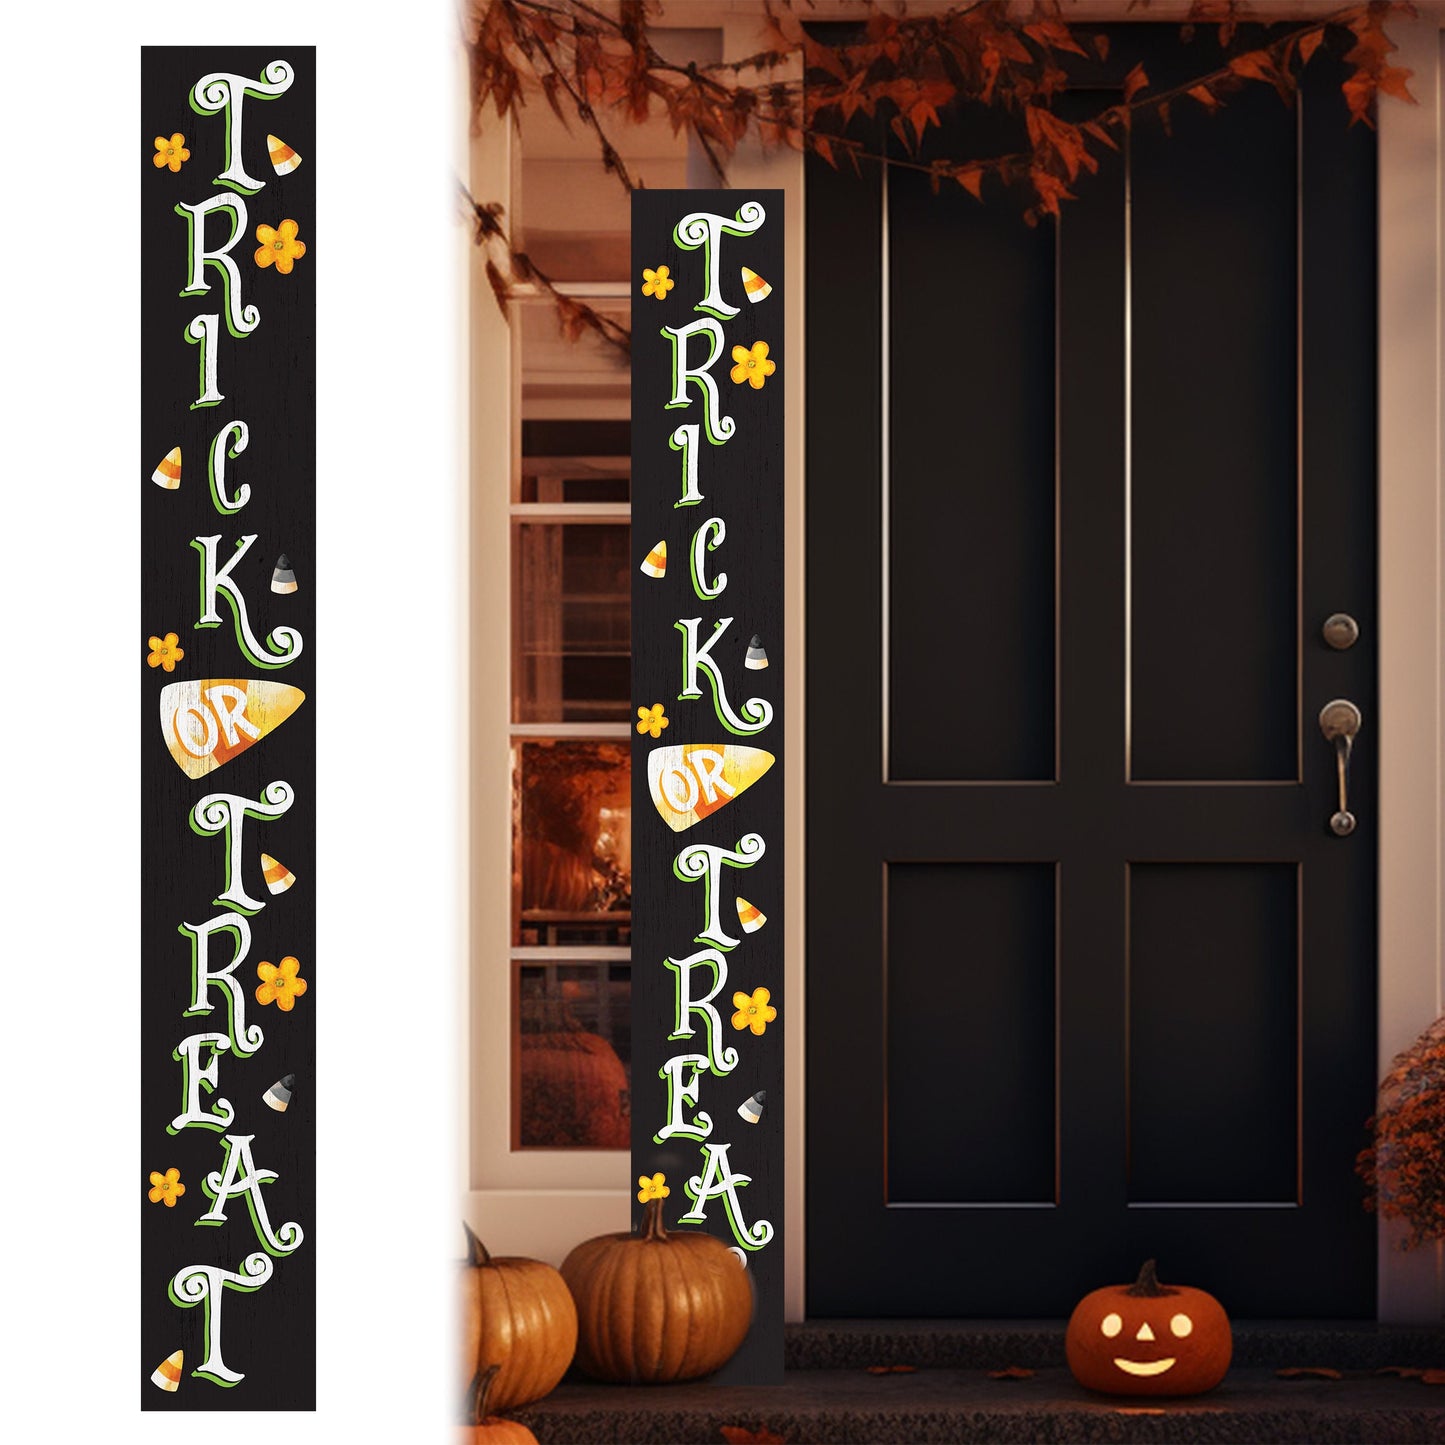 72in Halloween Porch Sign - Spooky Trick or Treat Front Door Decor